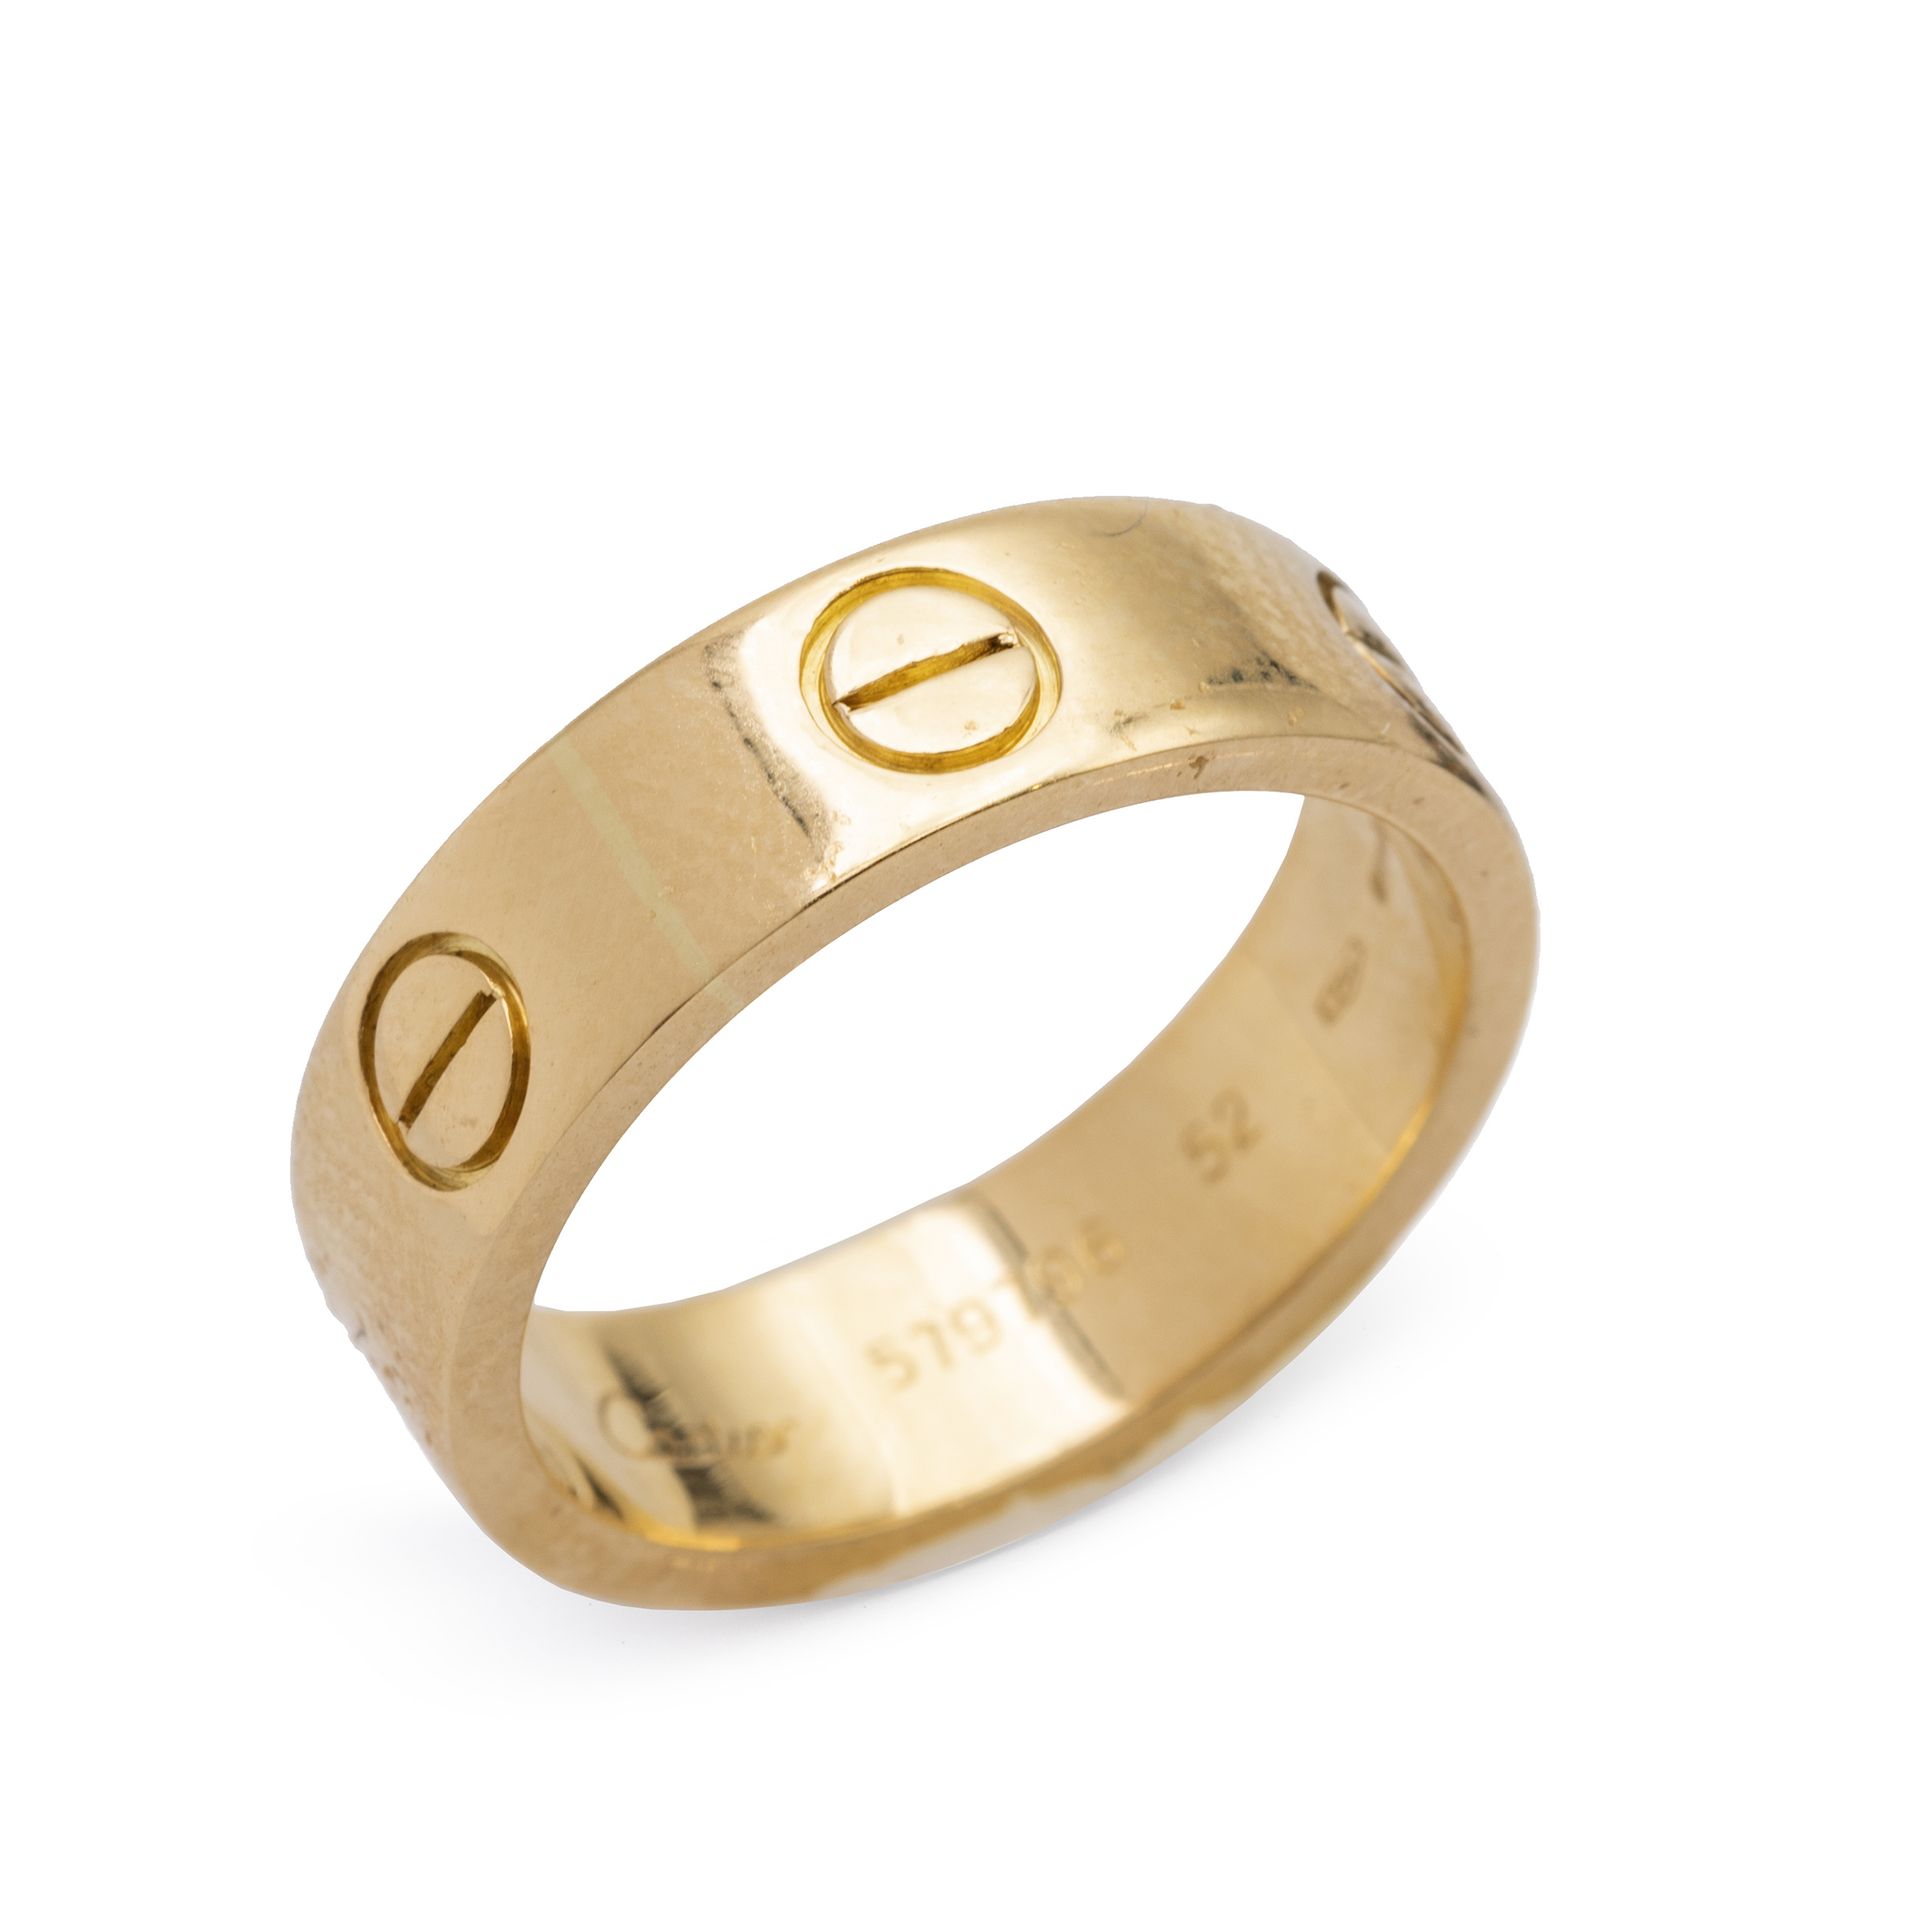 Cartier Love collection ring 有签名和编号，重7克，18K黄金，尺寸12，有盒子。